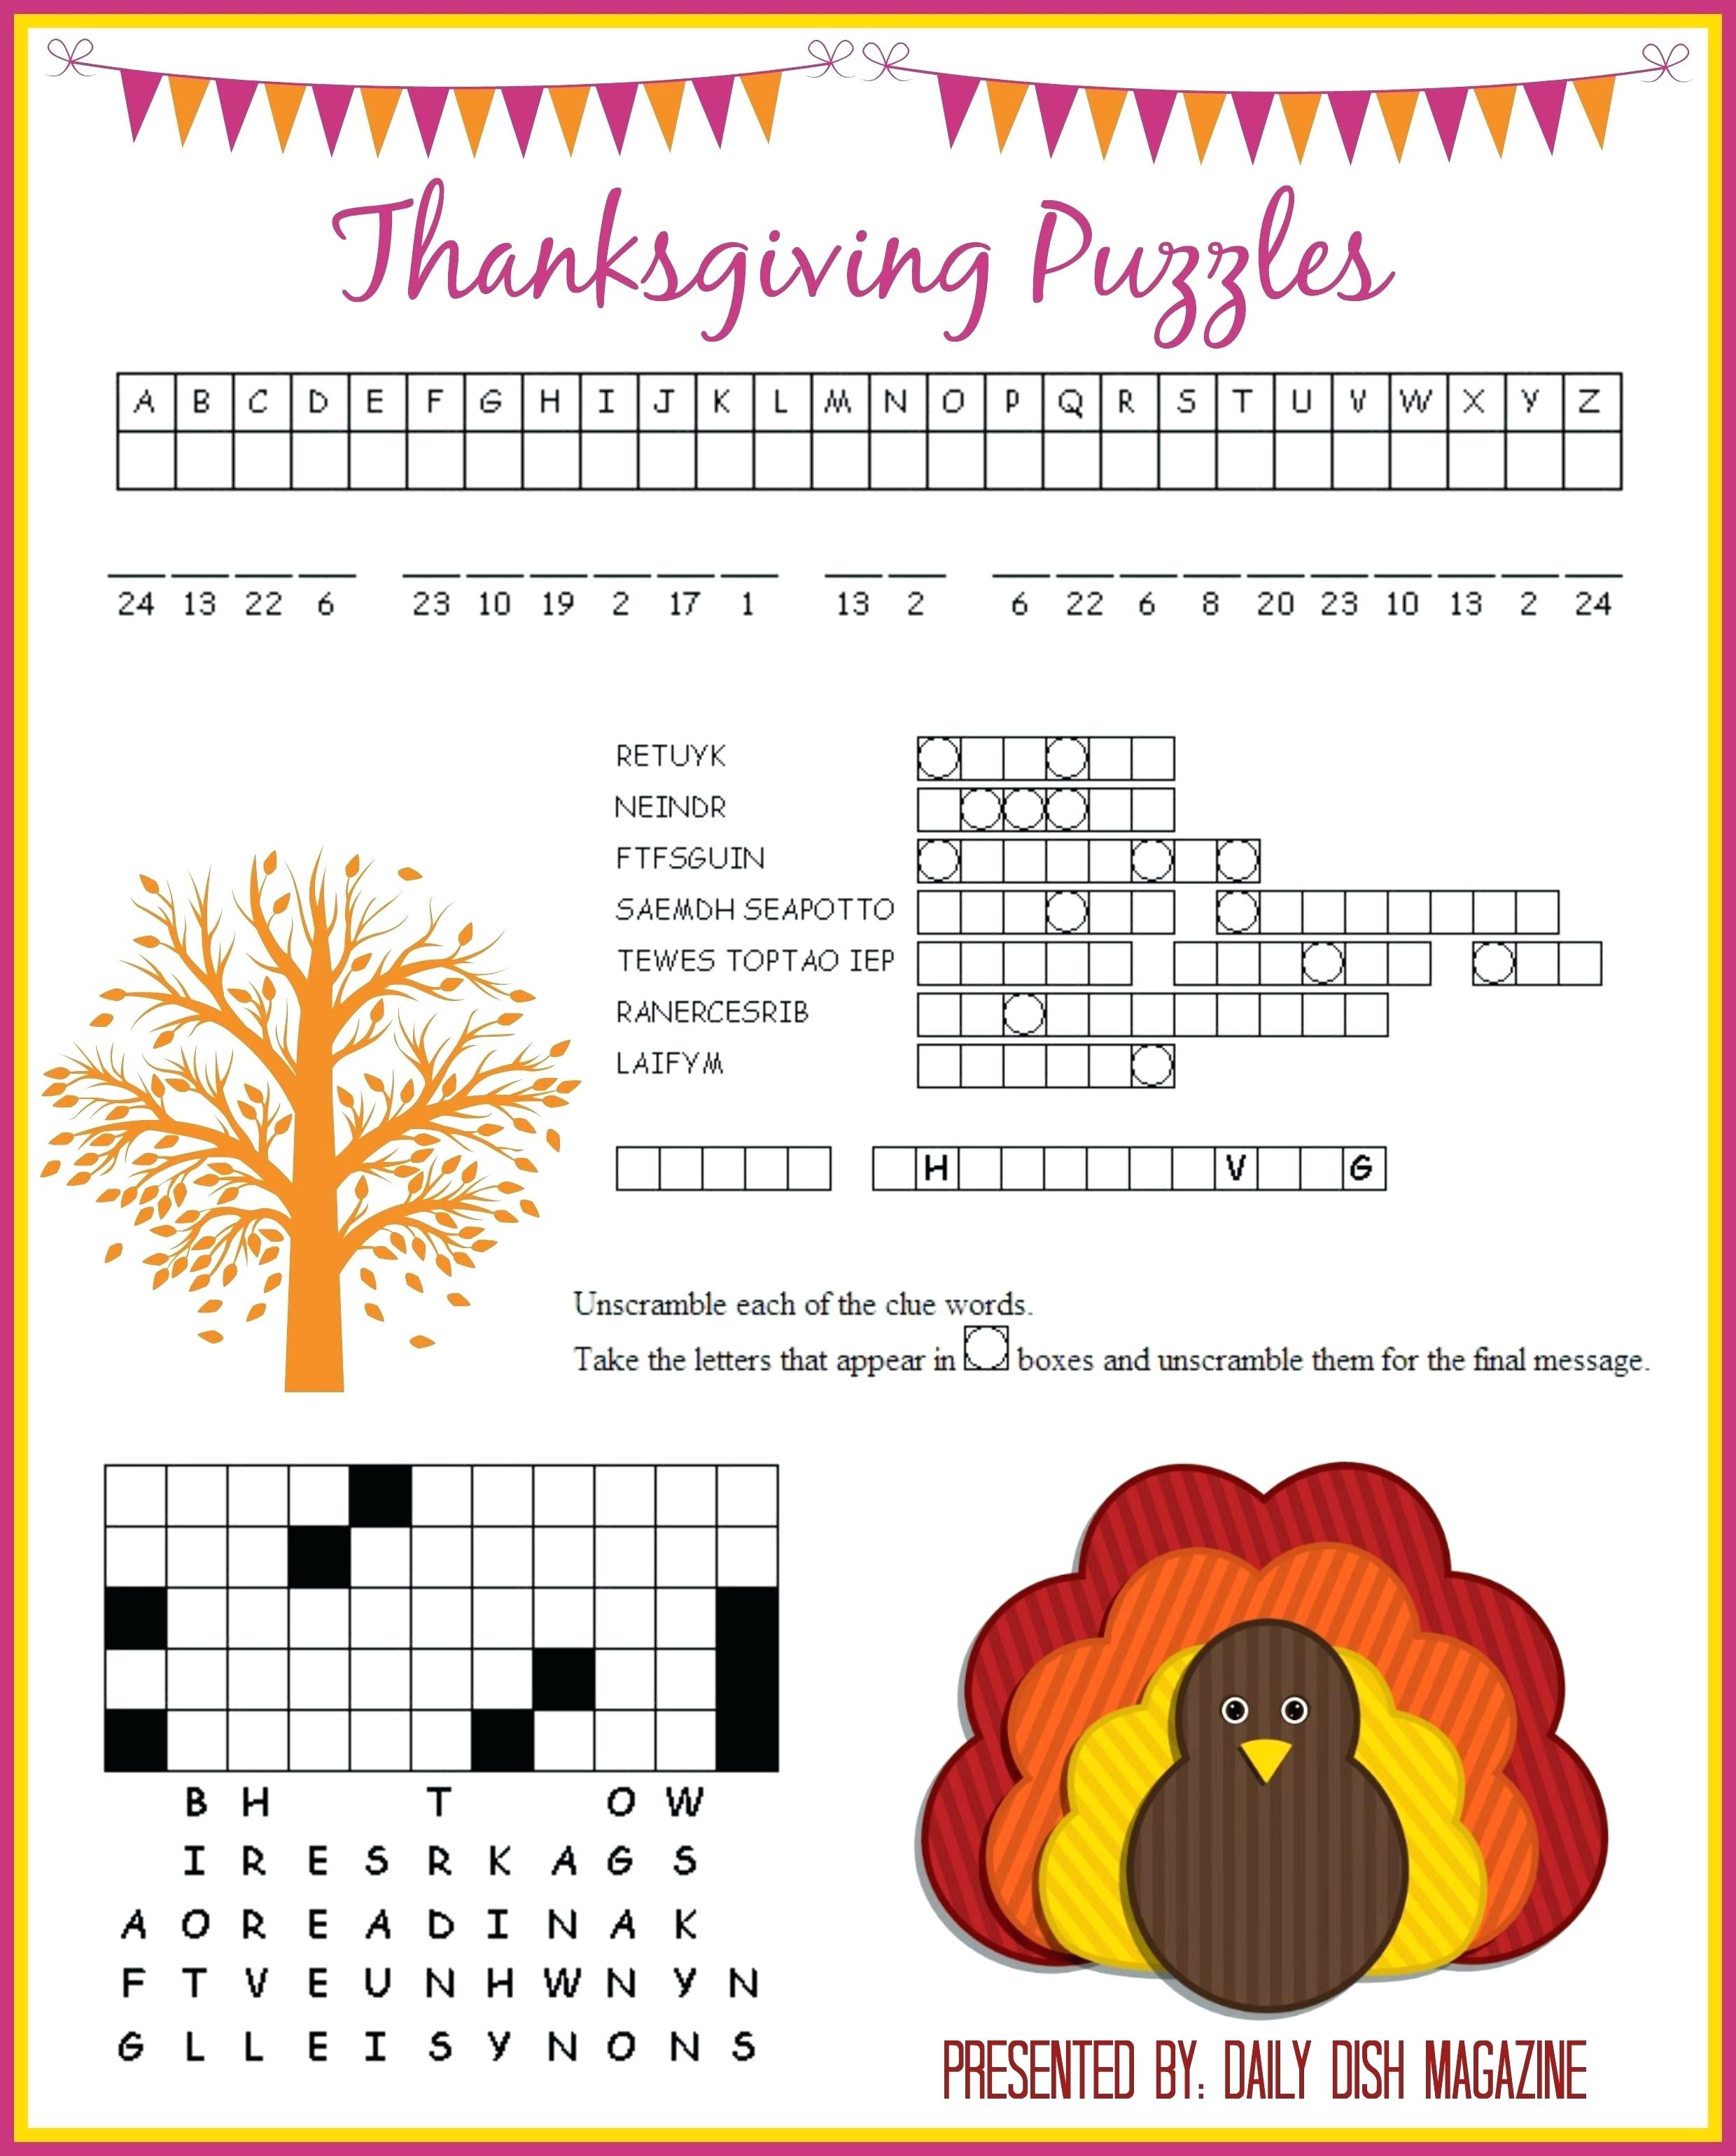 Thanksgiving Puzzles More Thanksgiving Puzzles Daily Dish Magazine - Thanksgiving Crossword Puzzles Printable Free